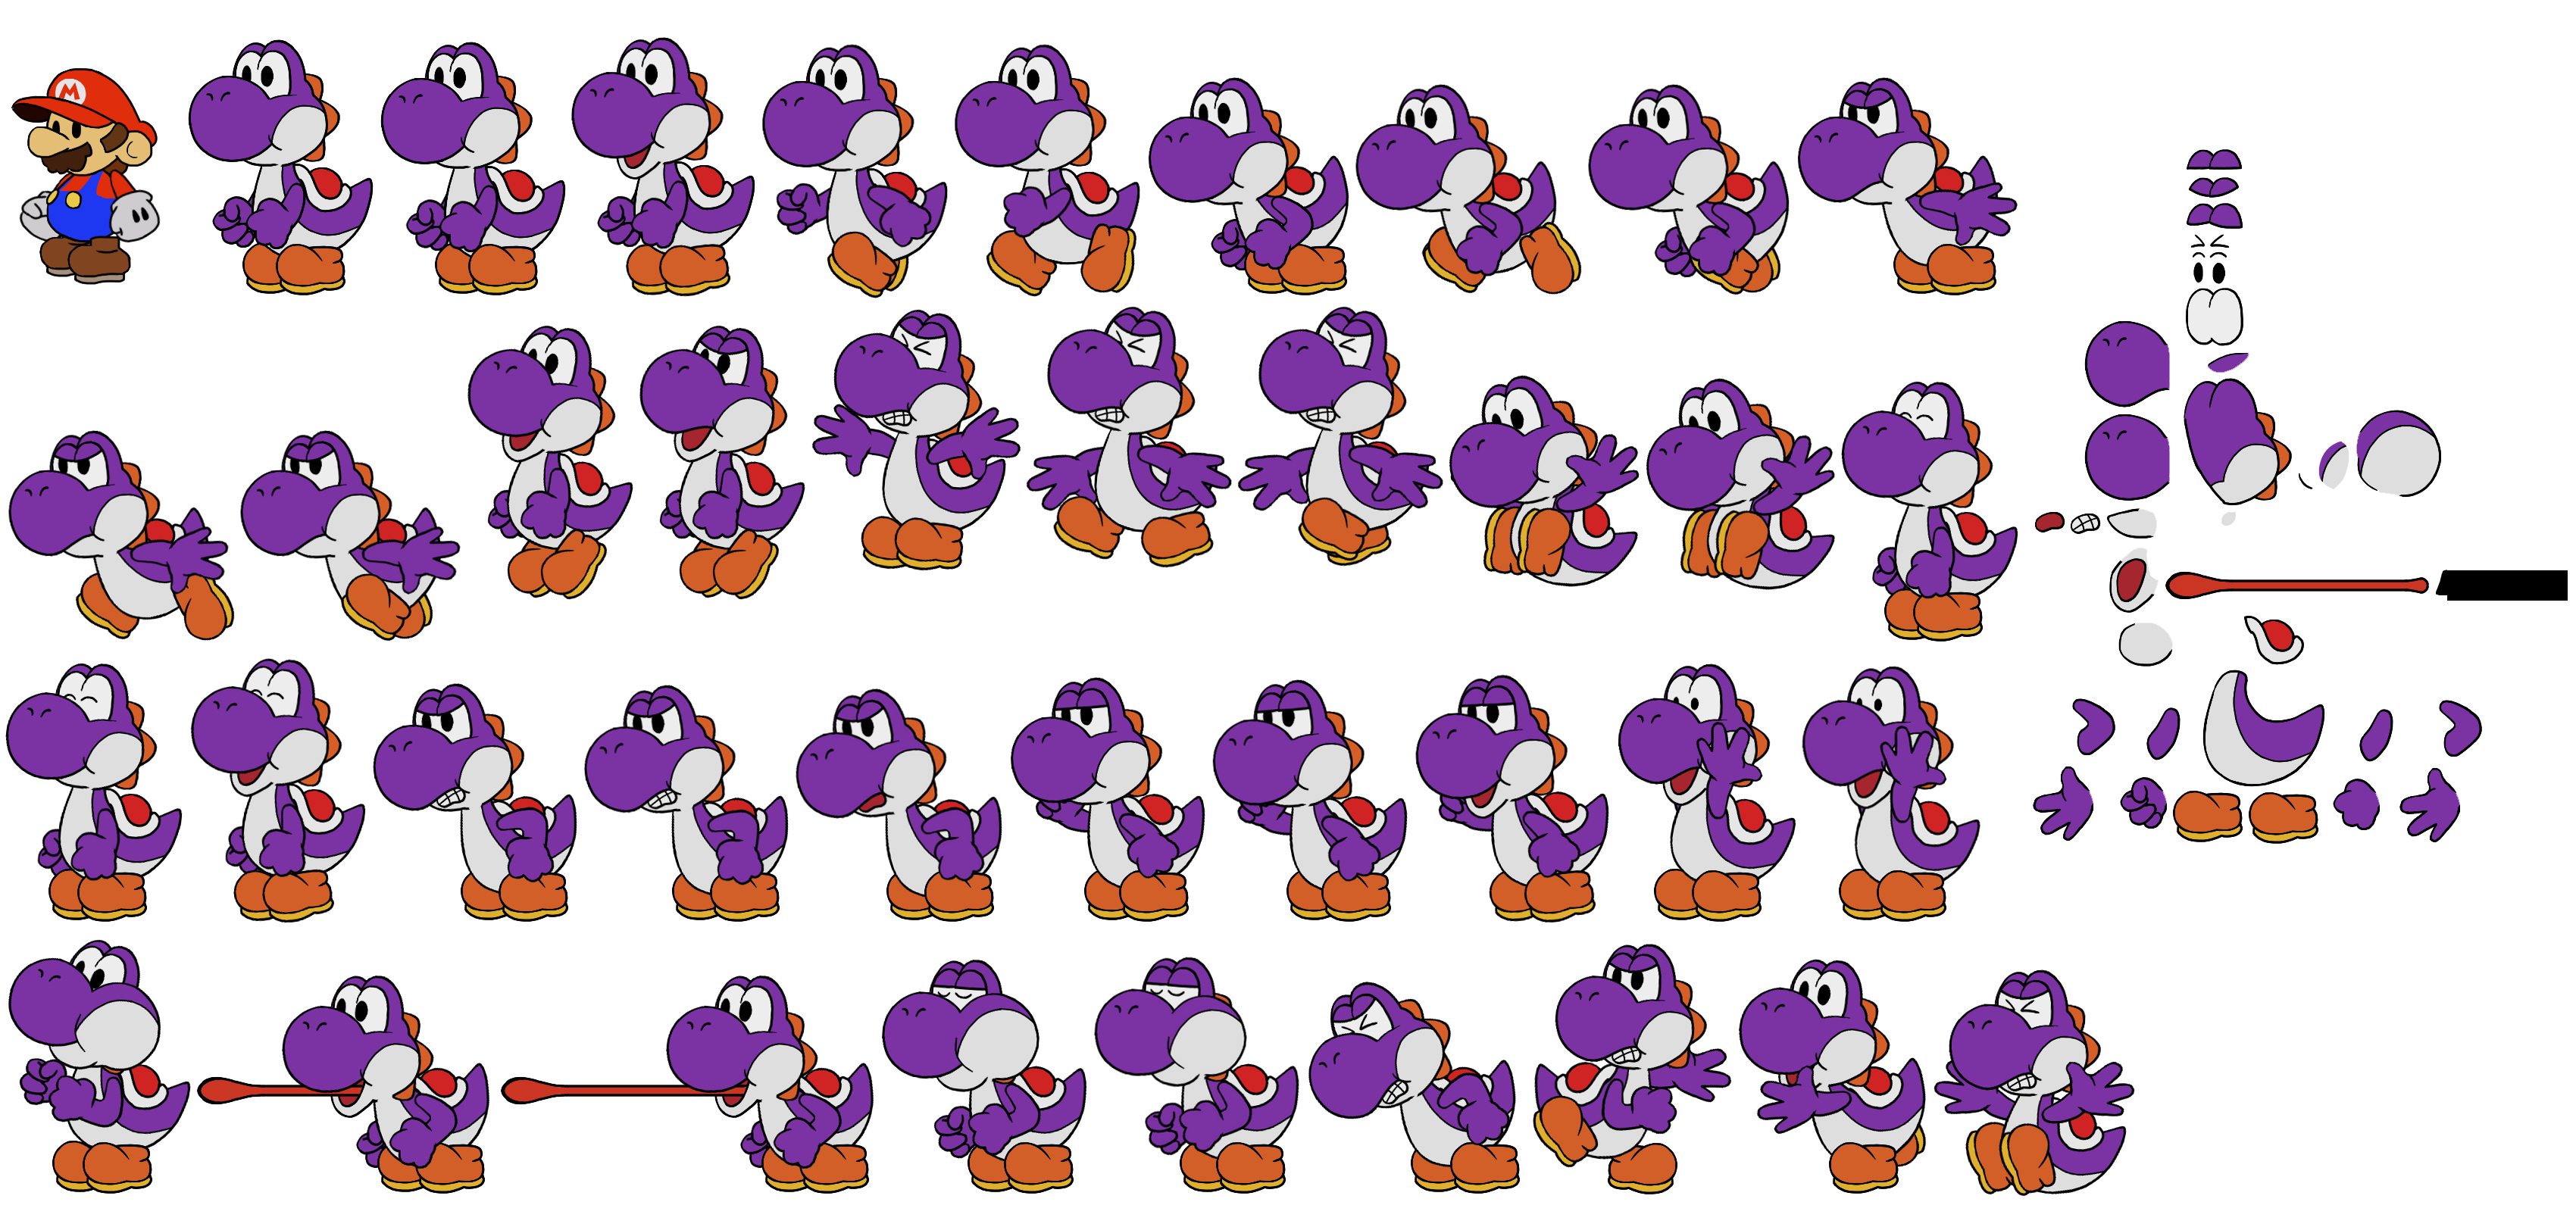 Yoshi Customs - Yoshi (Purple) (Paper Mario-Style, Modern)